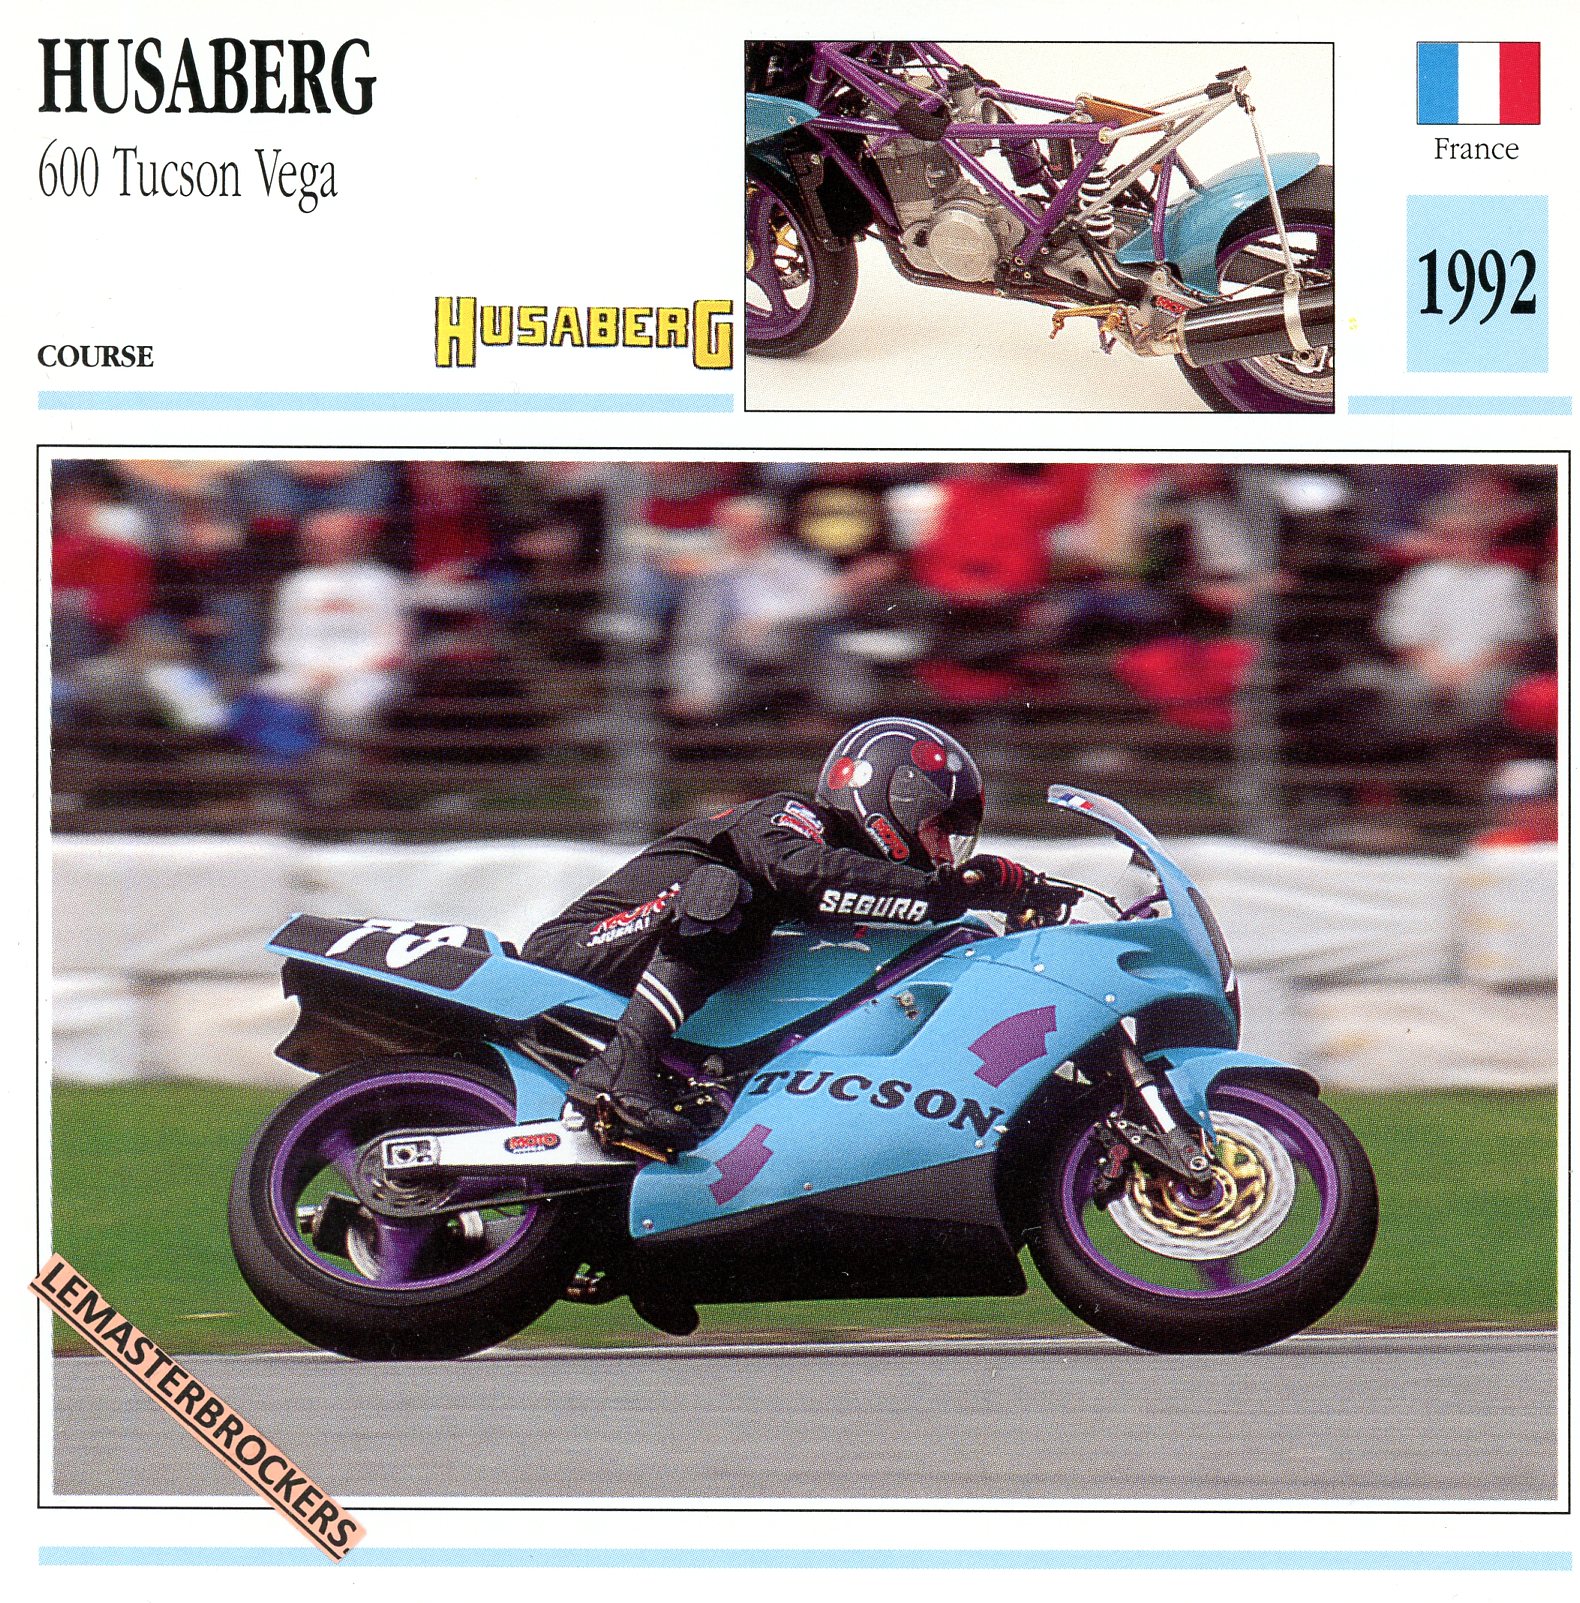 HUSABERG-600-TUSCON-VEGA-FICHE-MOTO-ATLAS-lemasterbrockers-CARD-MOTORCYCLE